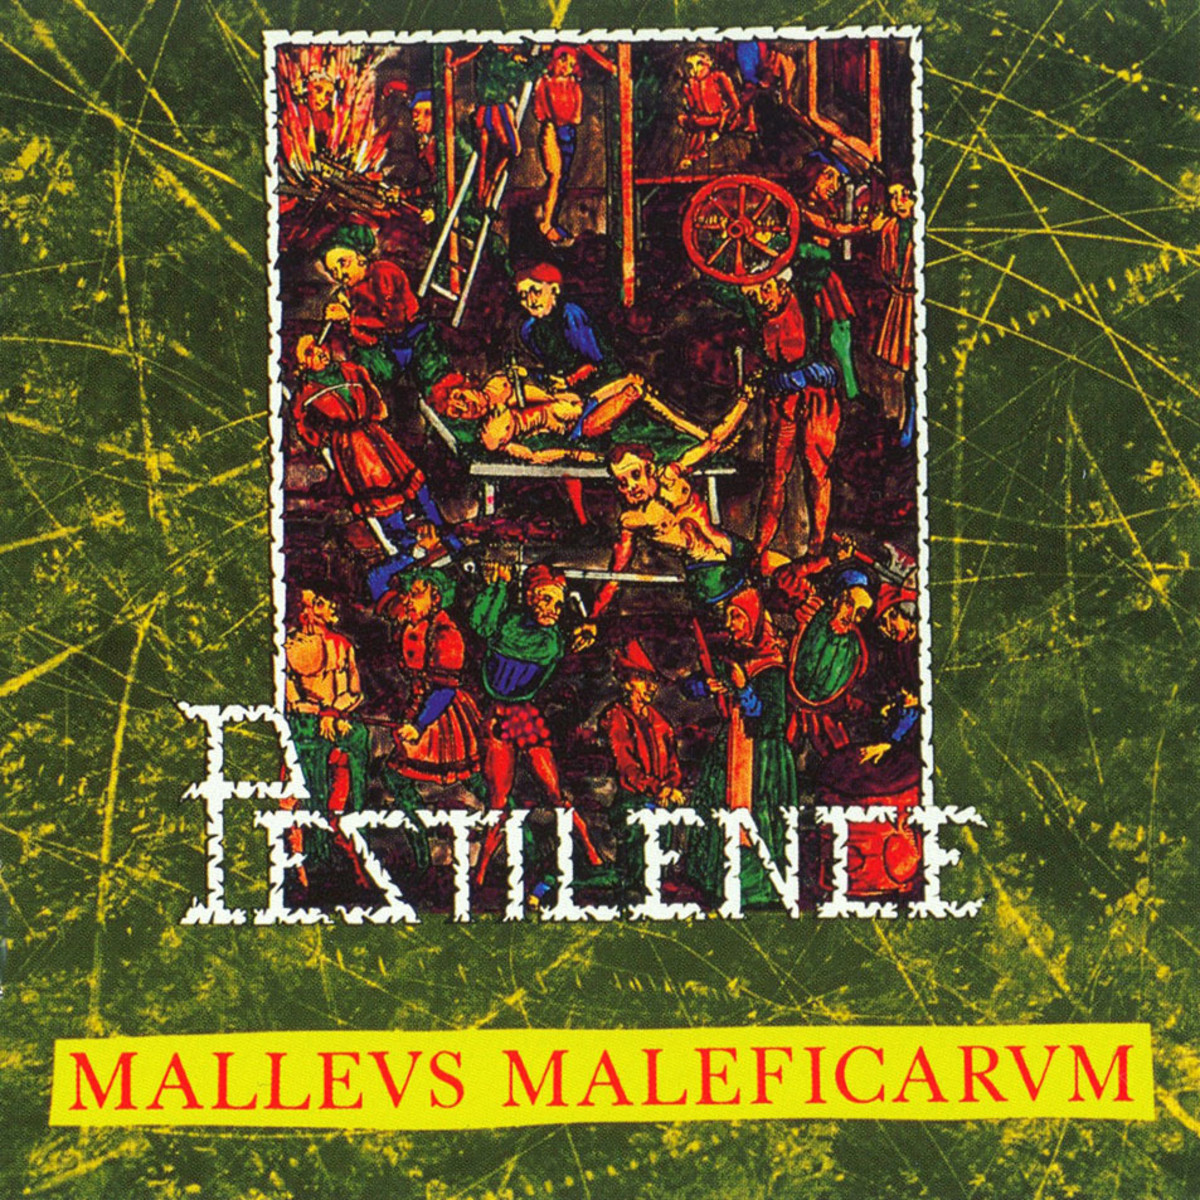 review-of-the-album-malleus-maleficarum-by-pestilence